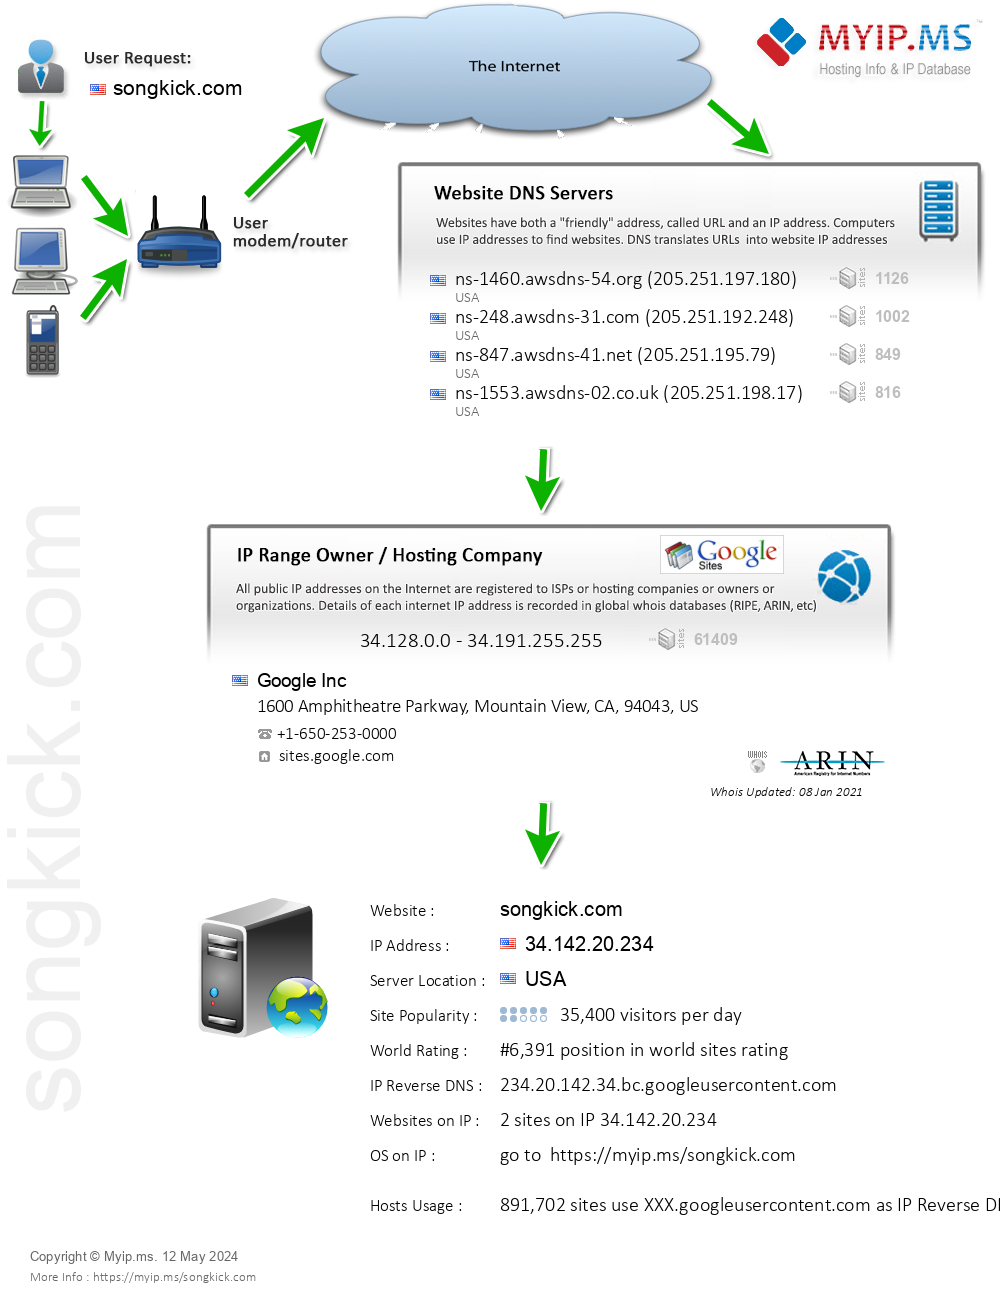 Songkick.com - Website Hosting Visual IP Diagram